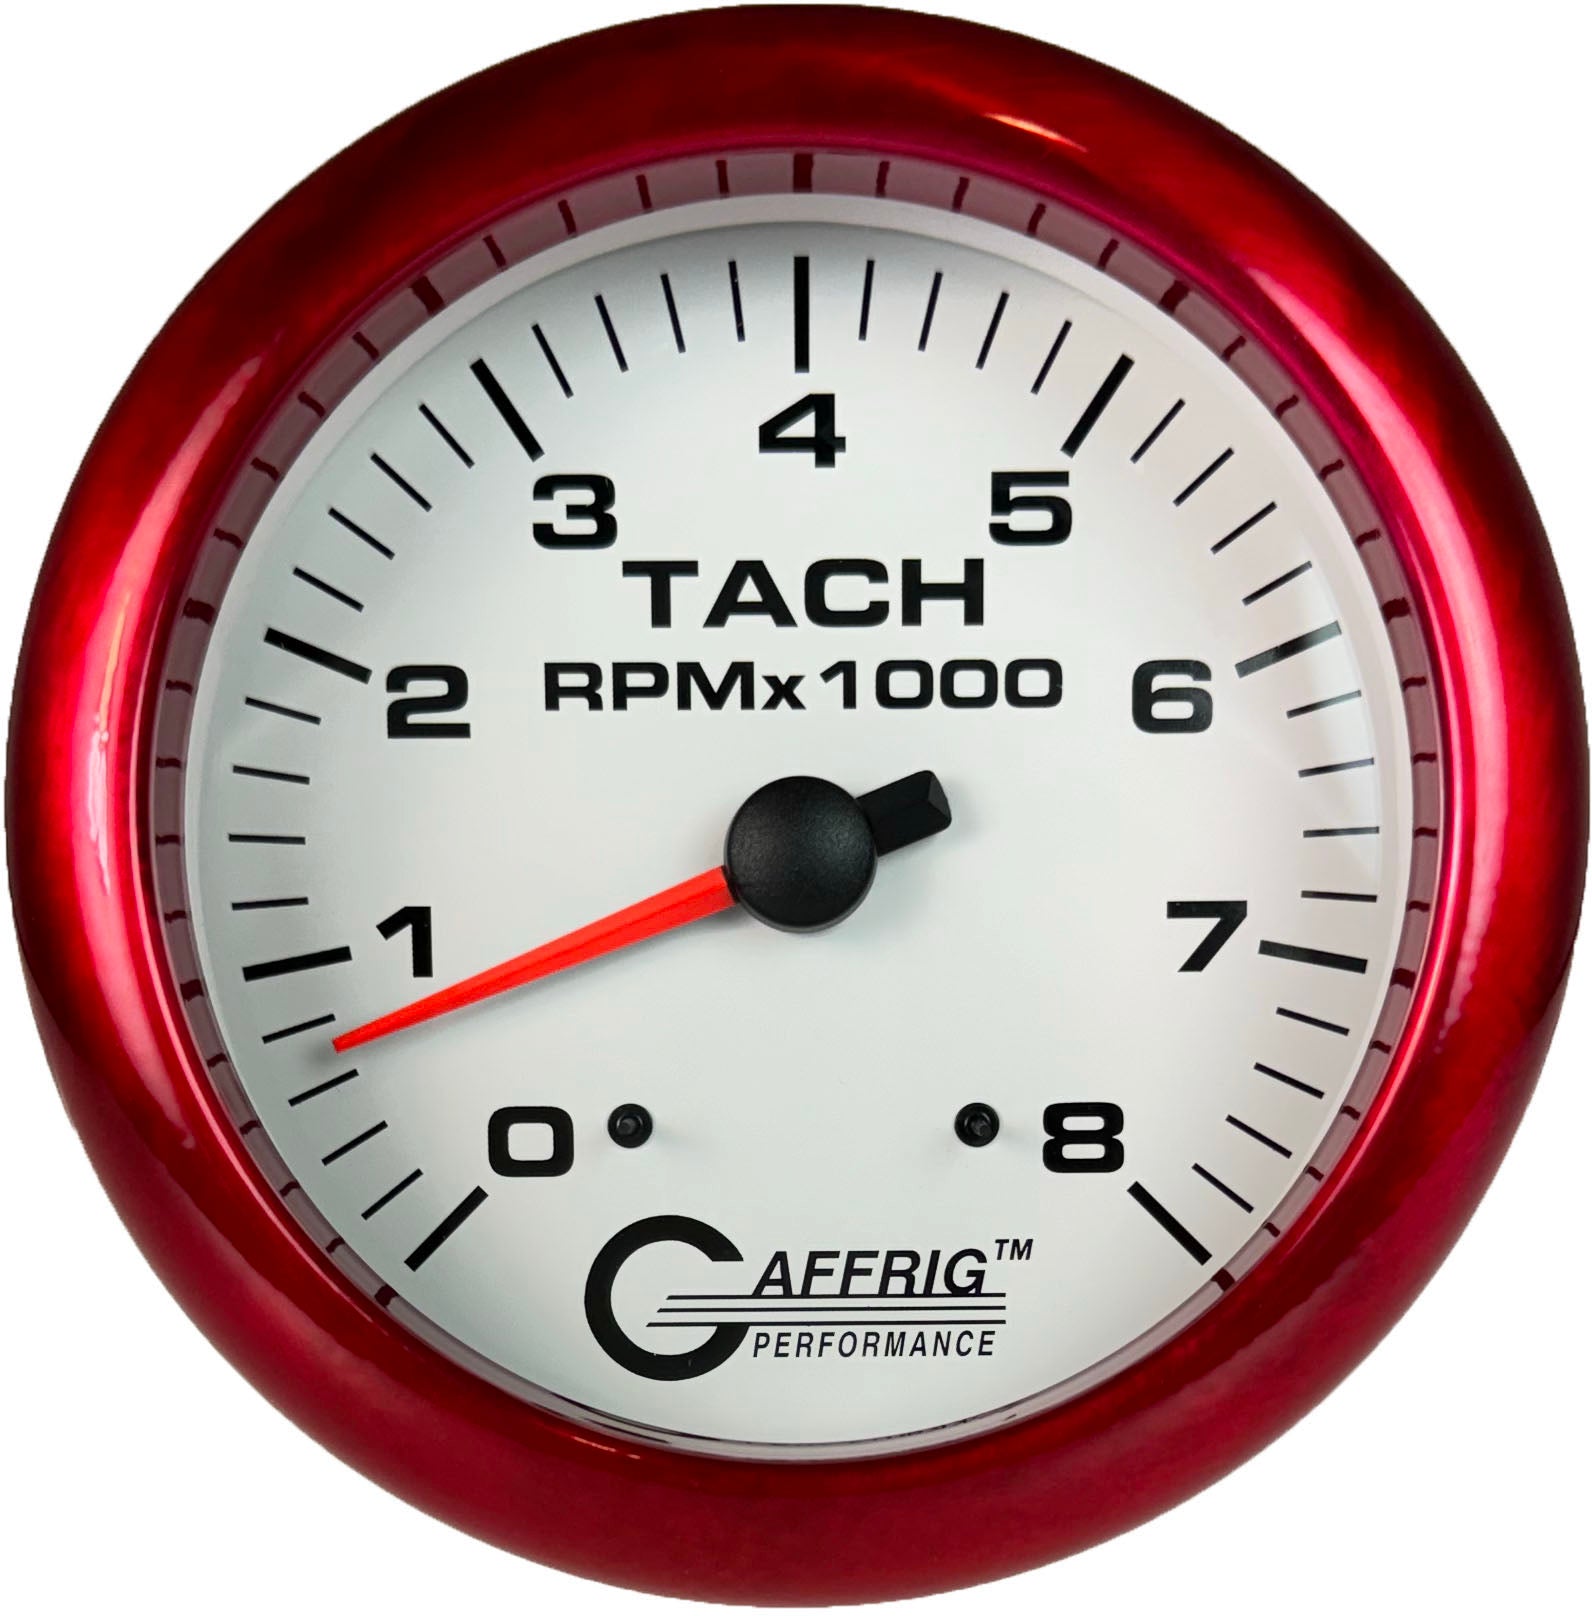 GAFFRIG PART #10019 4 5/8 INCH ELECTRIC TACHOMETER GAUGE 0-8000 RPM WHITE RED